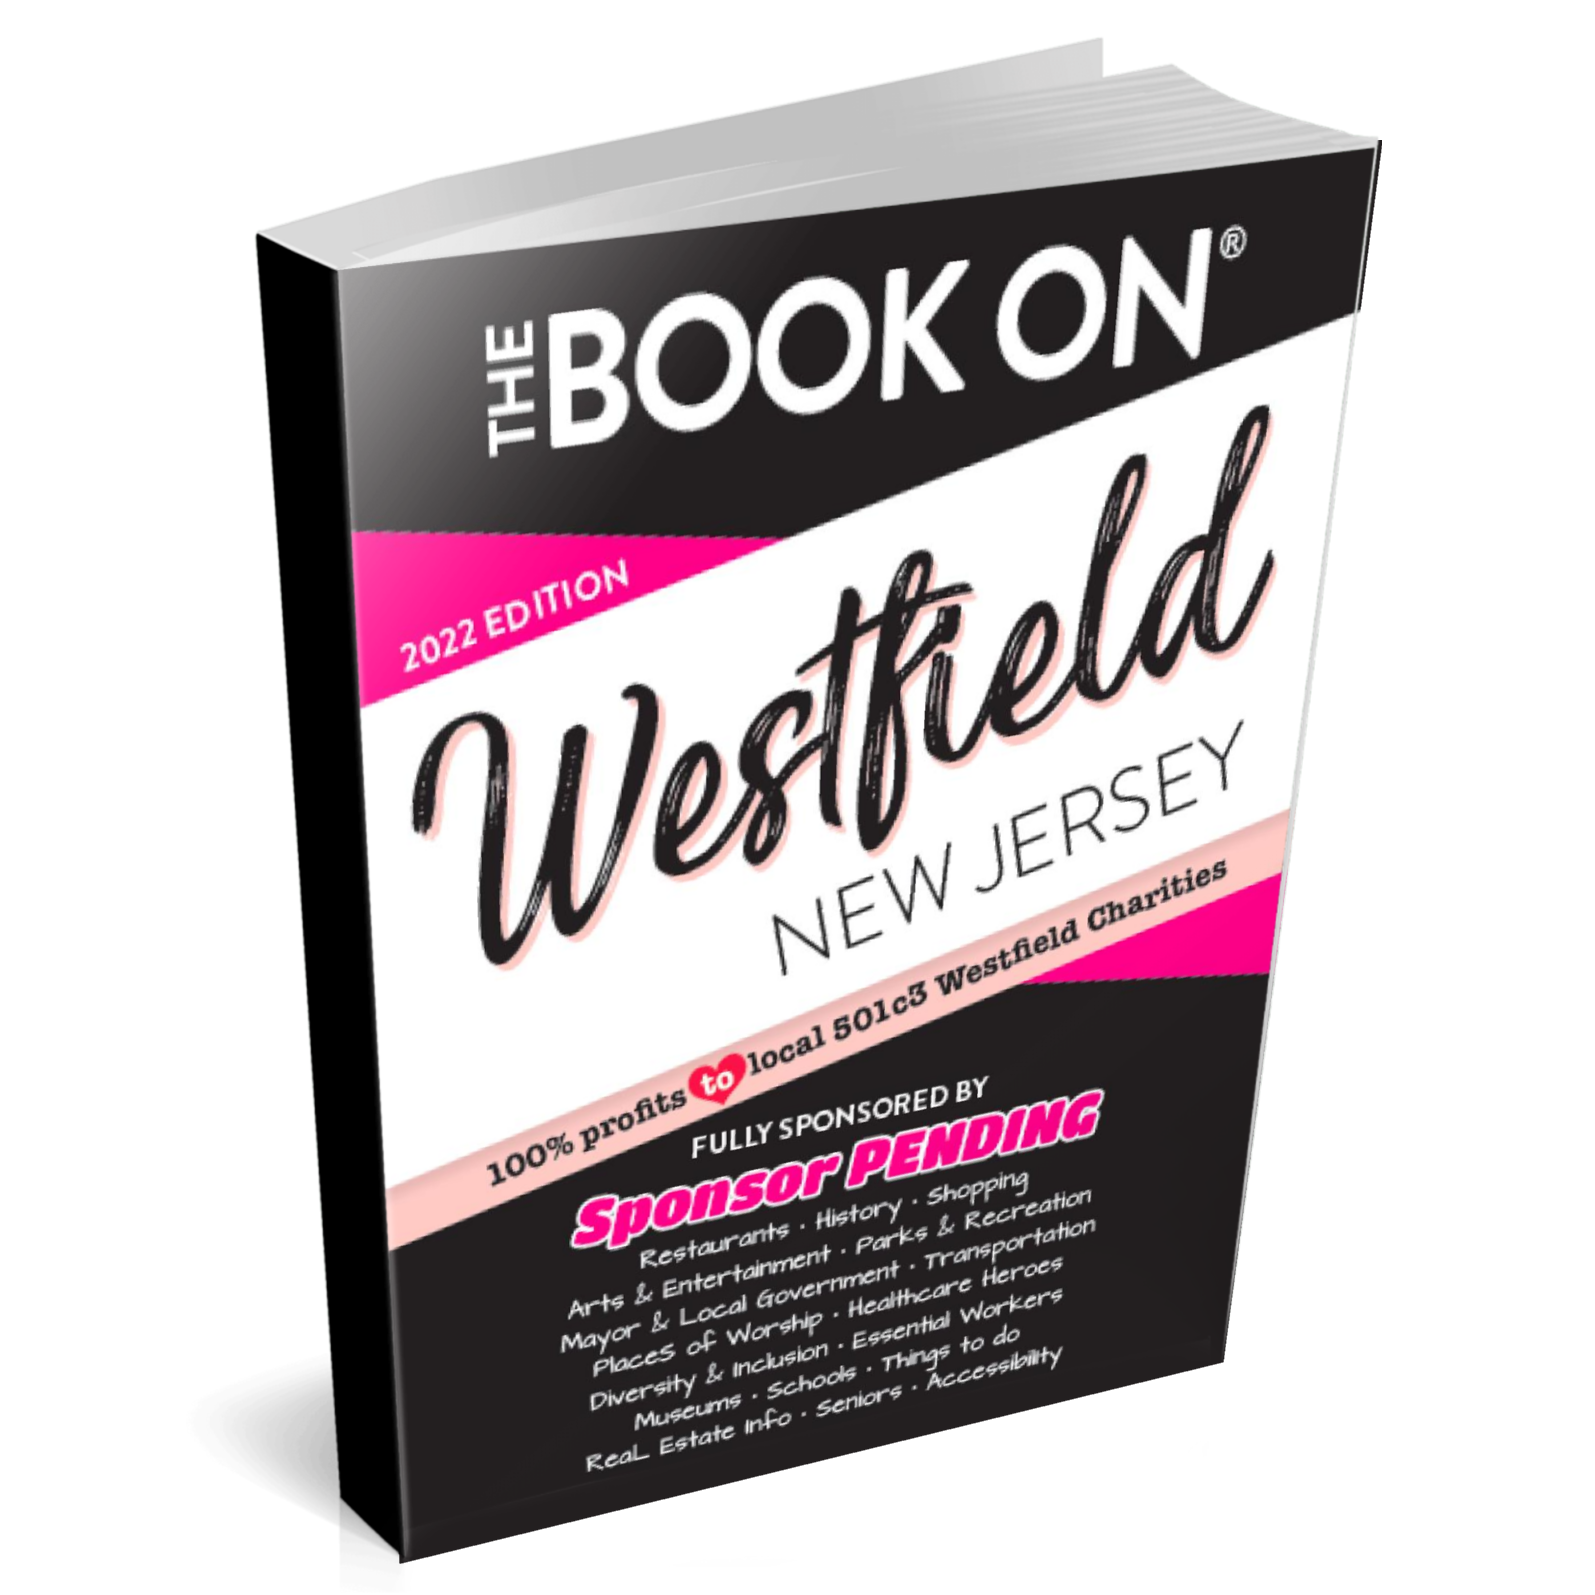 Chooserethink:Westfield NEW JERSEY